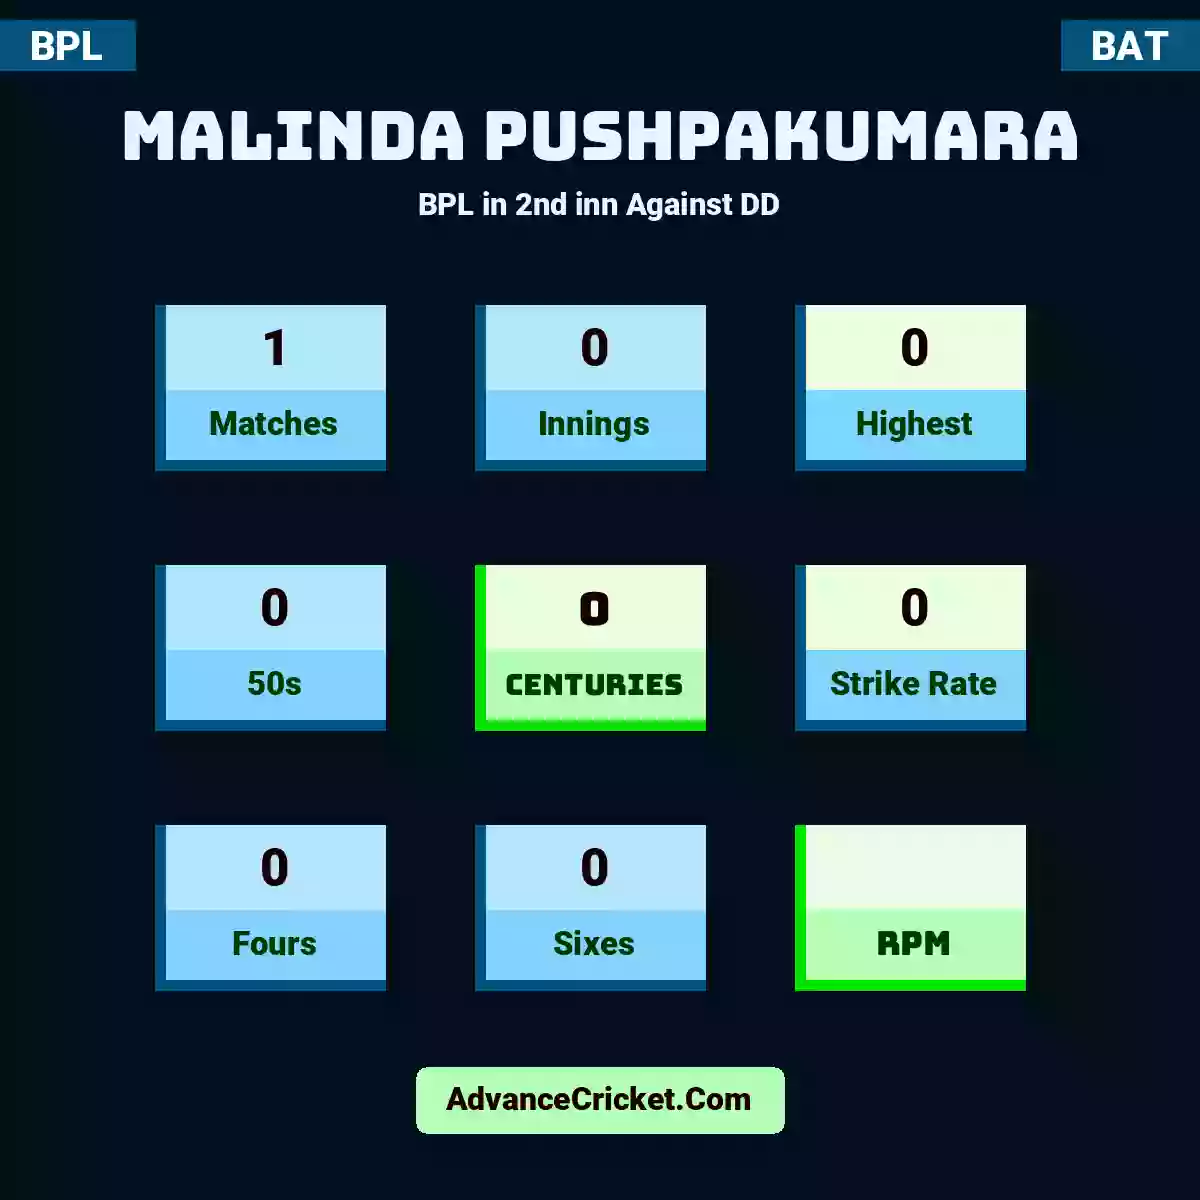 Malinda Pushpakumara BPL  in 2nd inn Against DD, Malinda Pushpakumara played 1 matches, scored 0 runs as highest, 0 half-centuries, and 0 centuries, with a strike rate of 0. M.Pushpakumara hit 0 fours and 0 sixes.